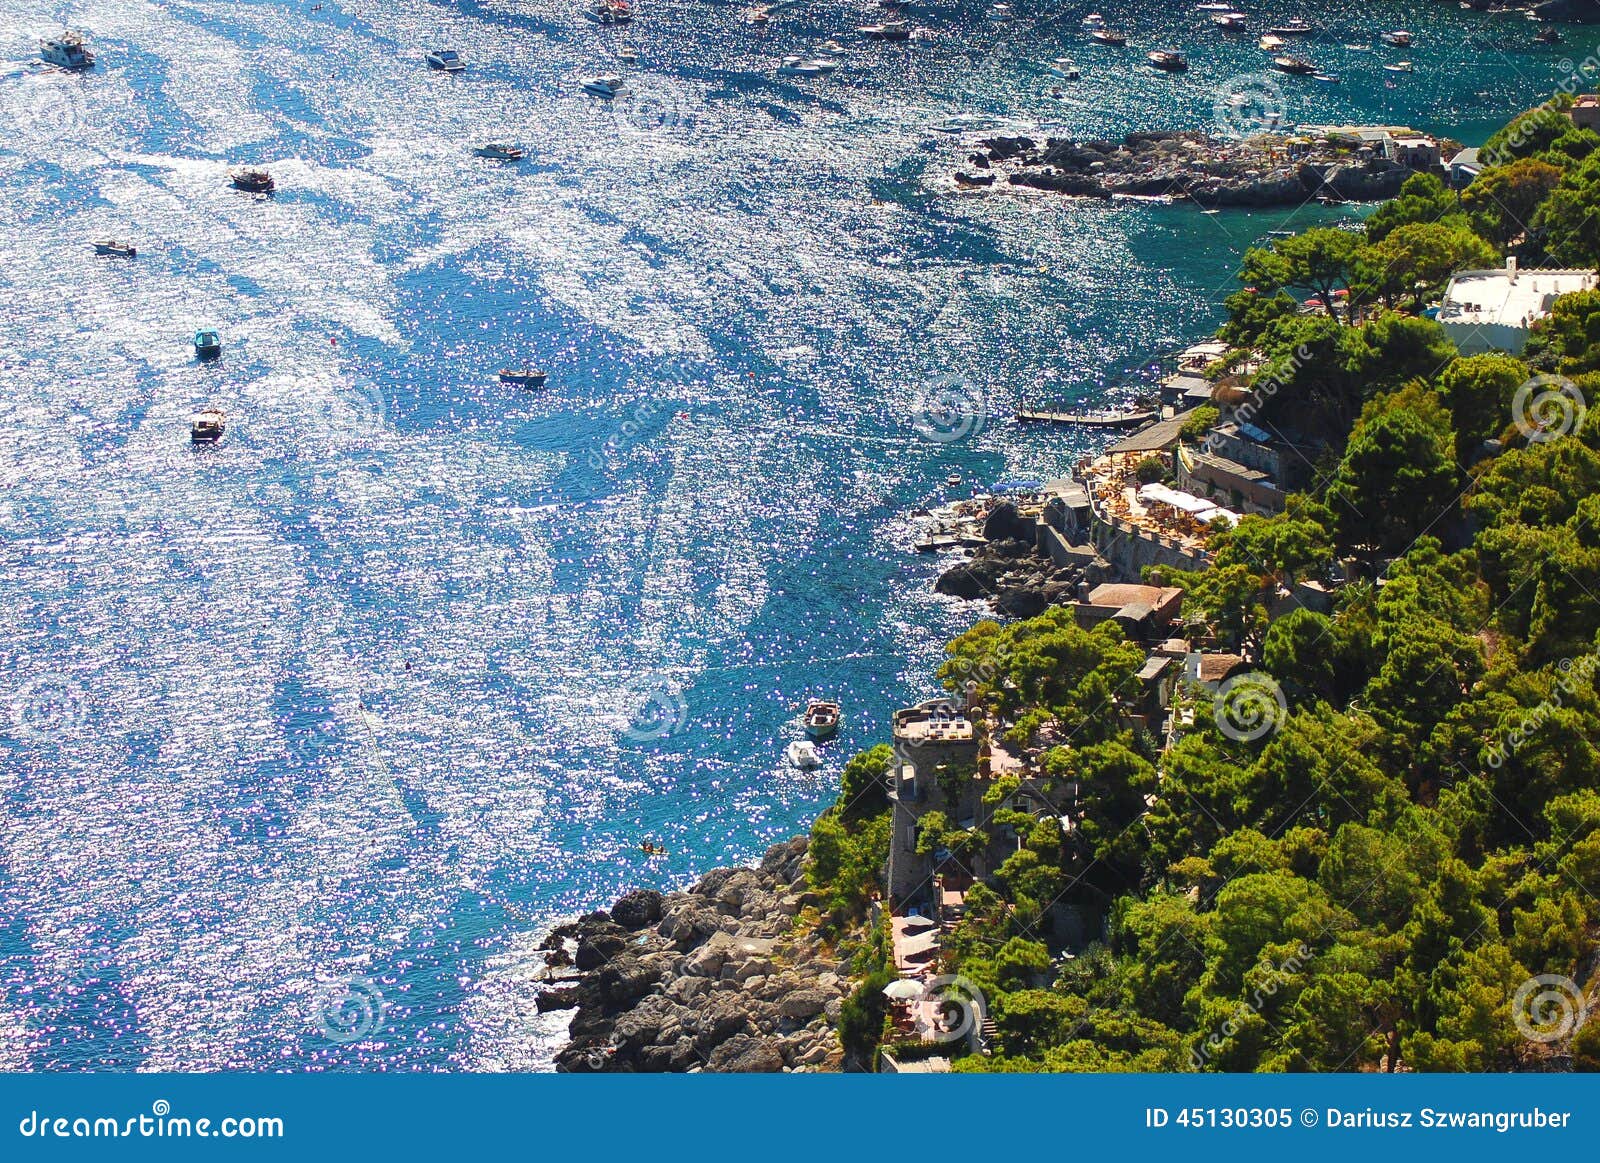 picturesque marina piccola on capri island, italy